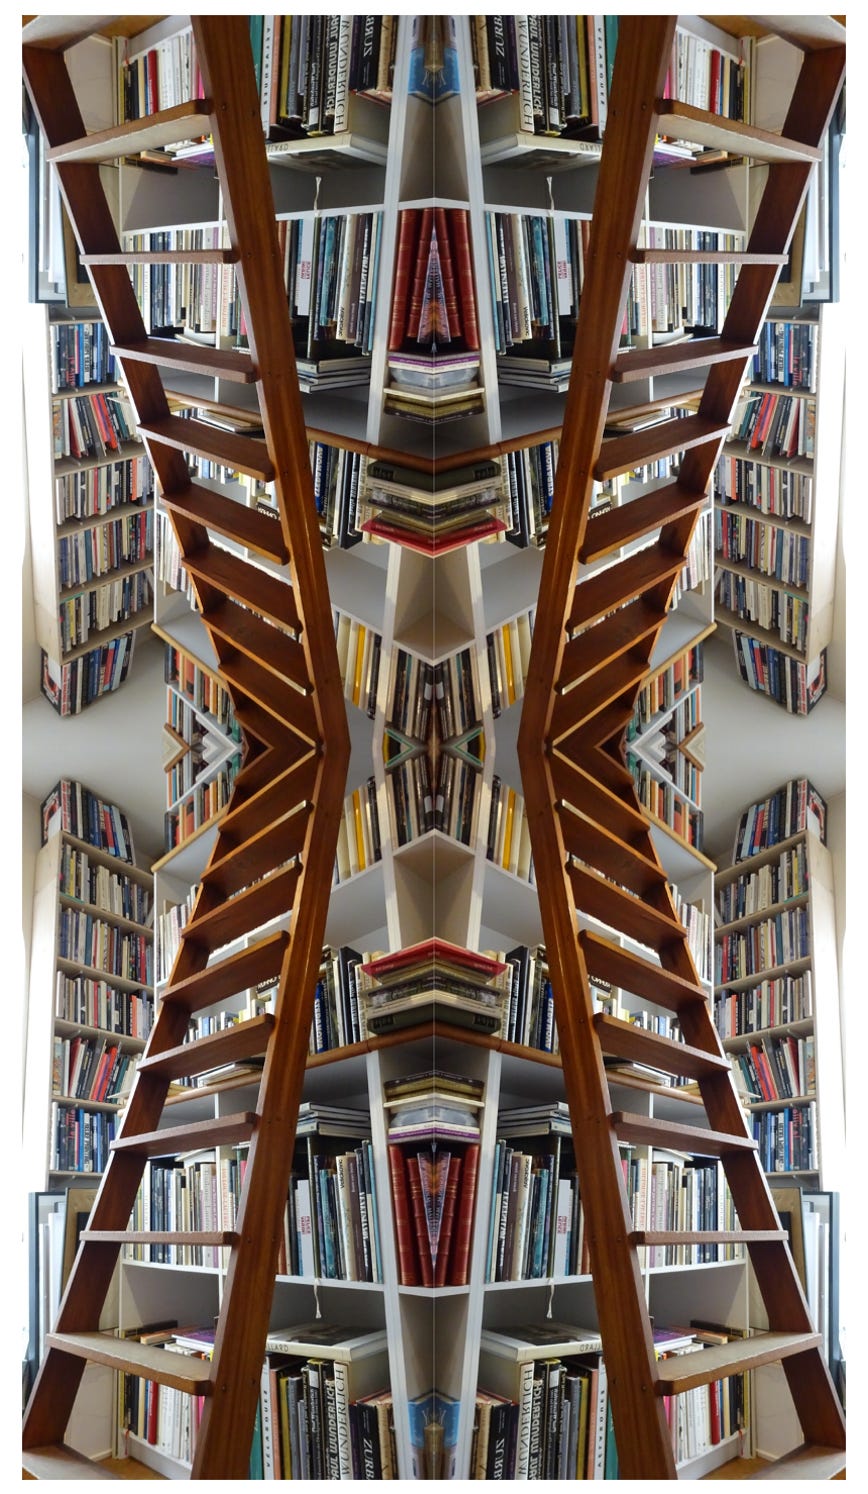 Jacob's ladder of books